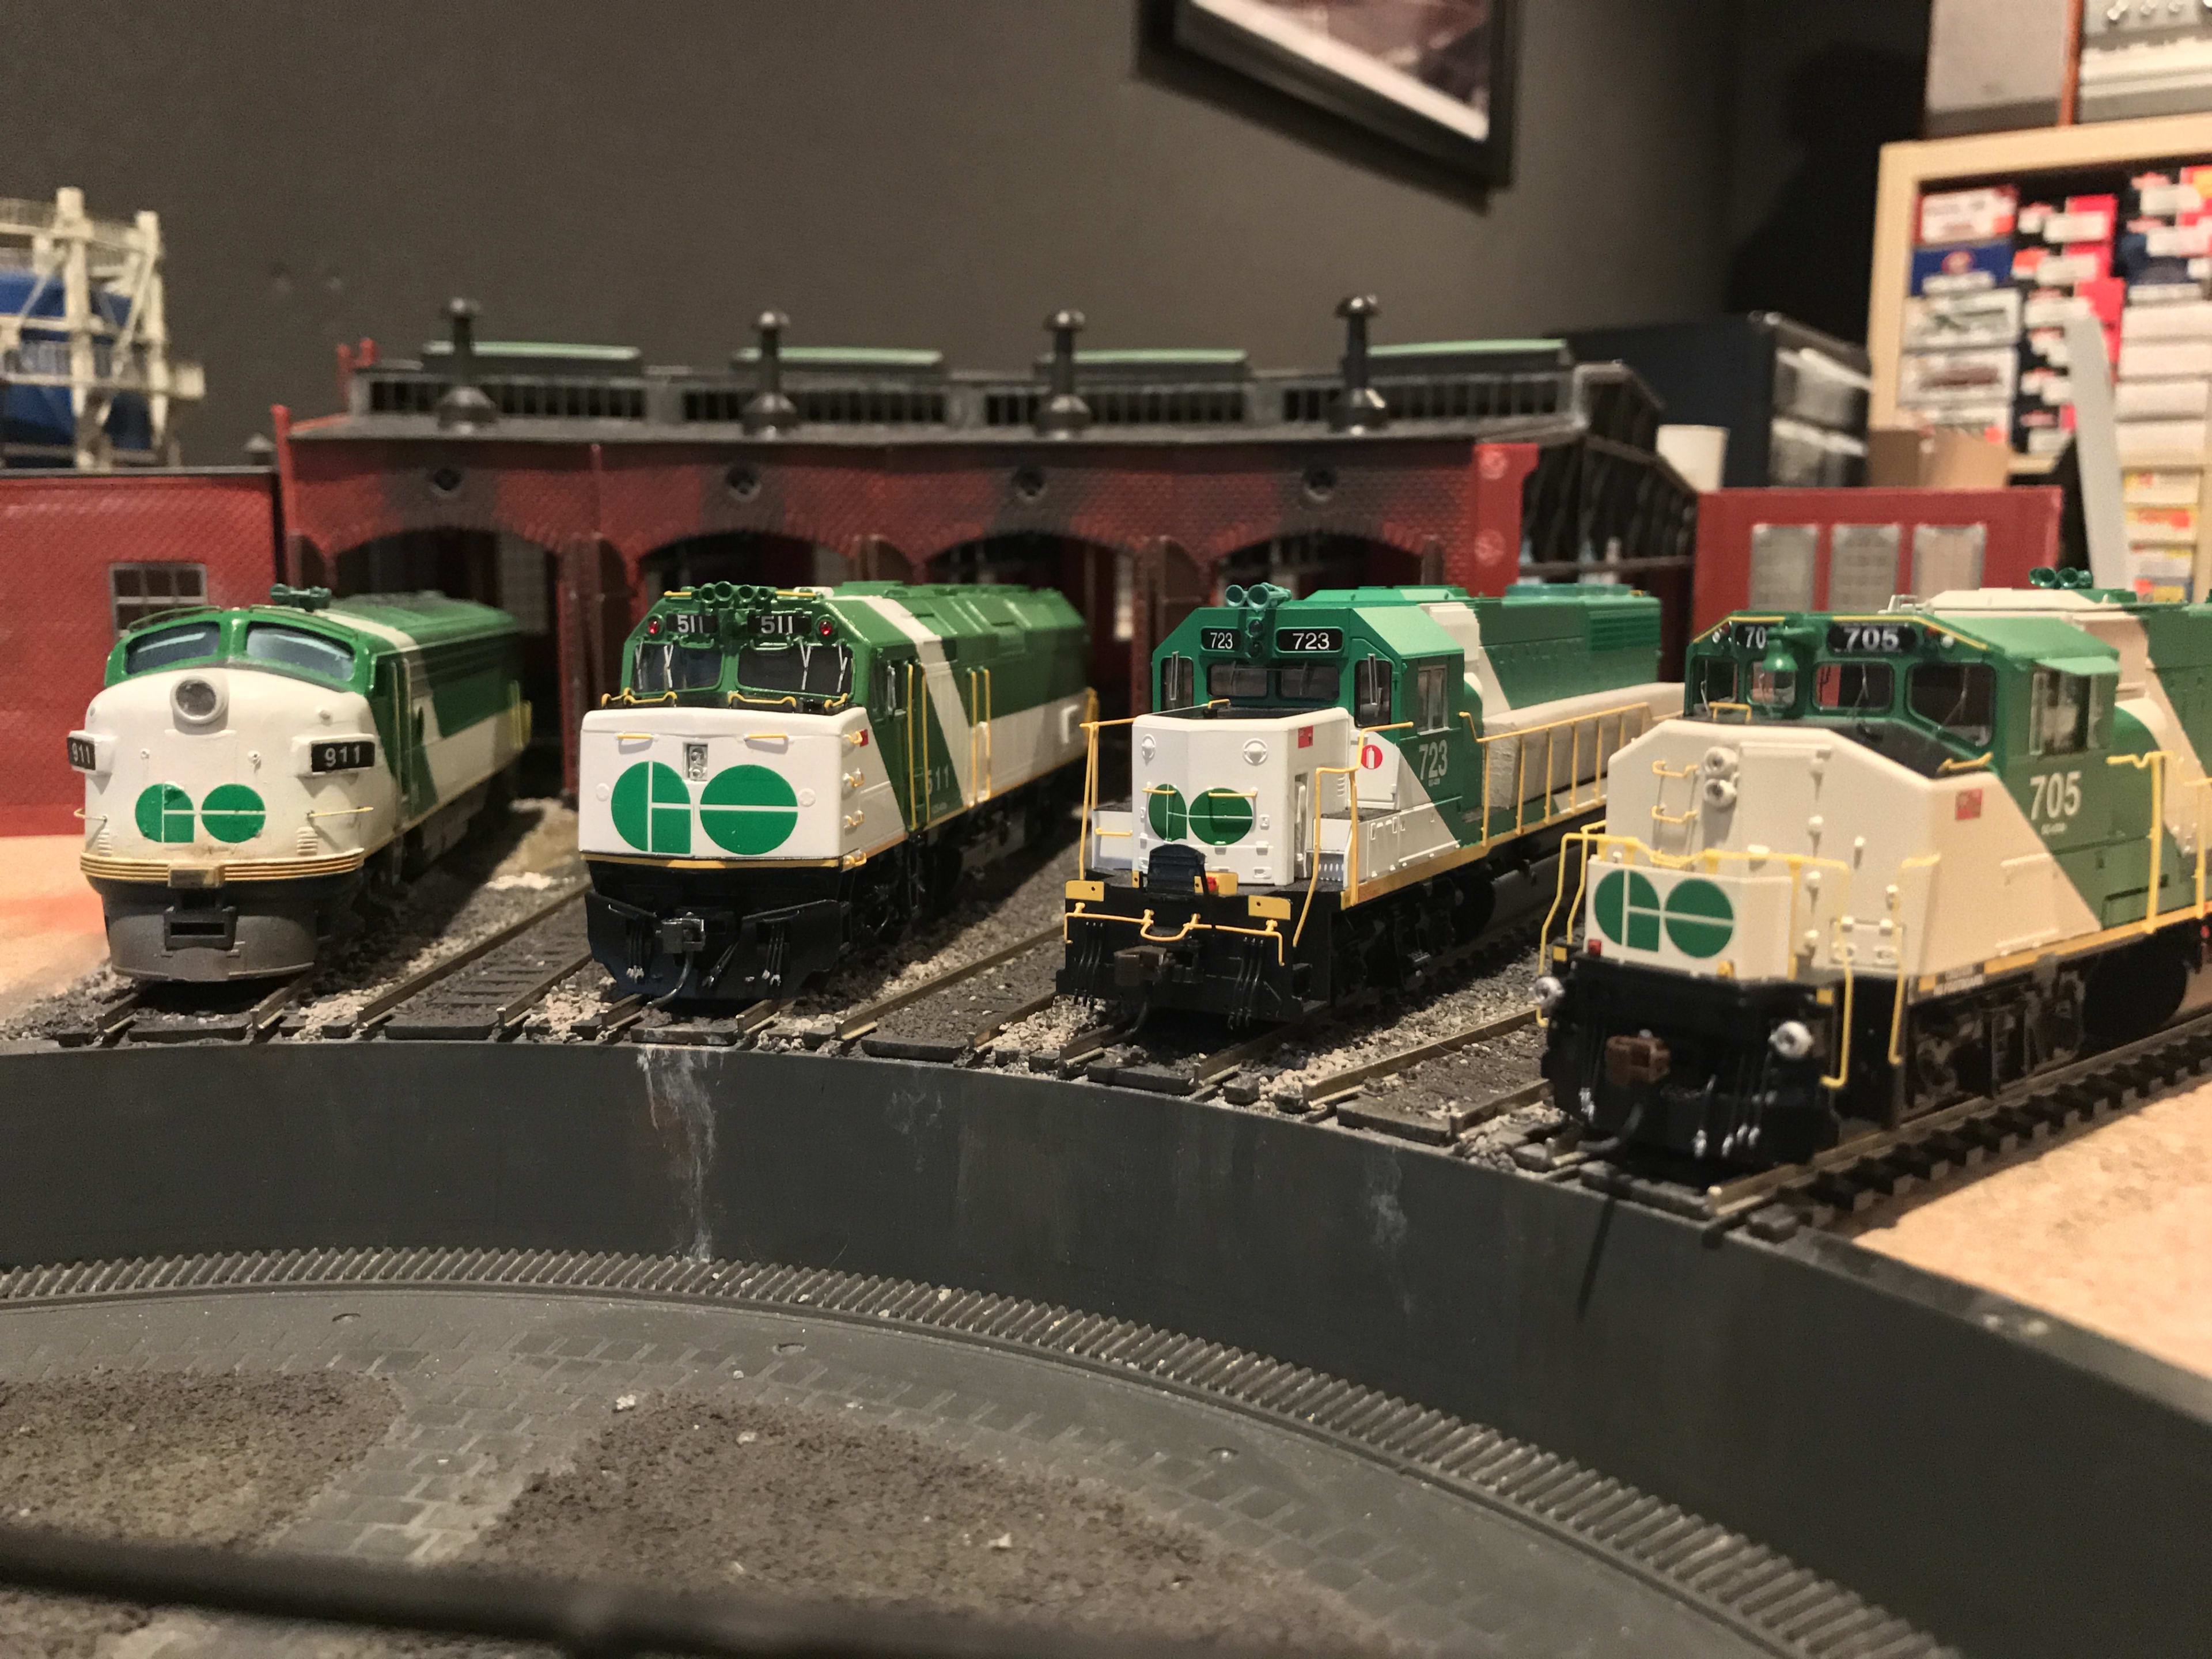 four model GO trains sit idle in the miniature rail yard.